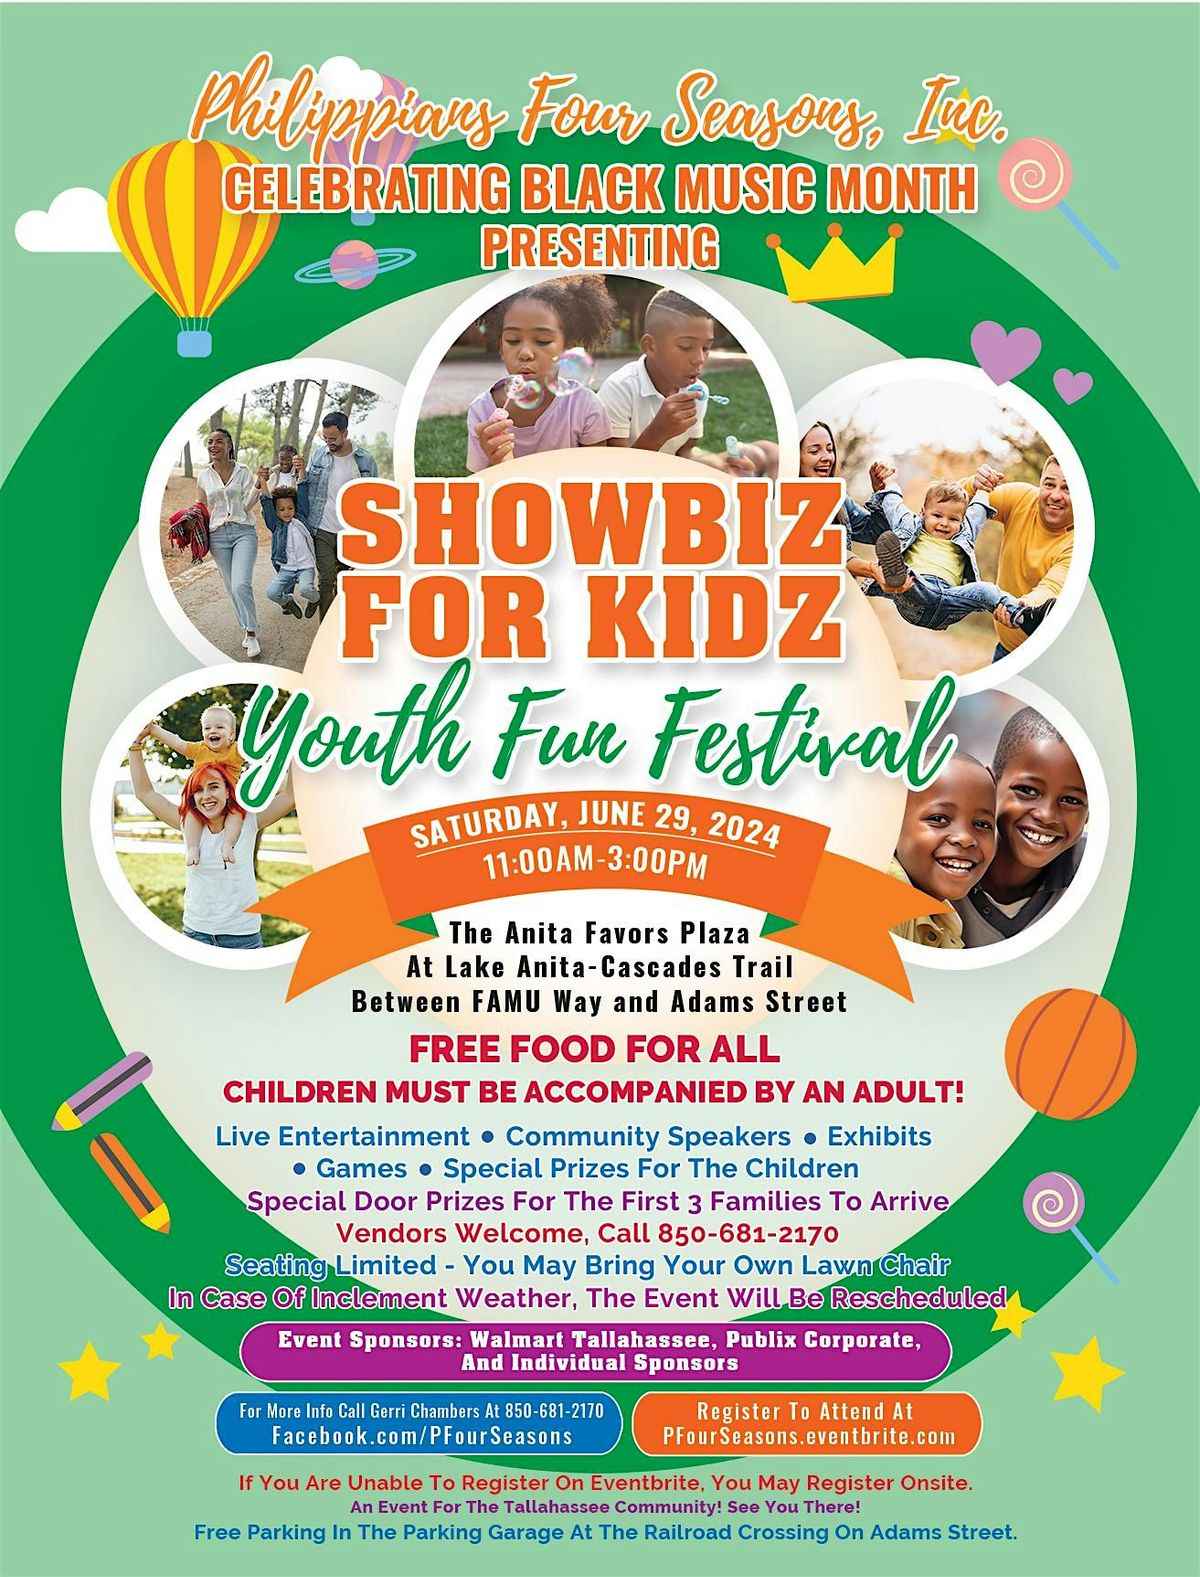 SHOWBIZ FOR KIDZ YOUTH FUN FESTIVAL